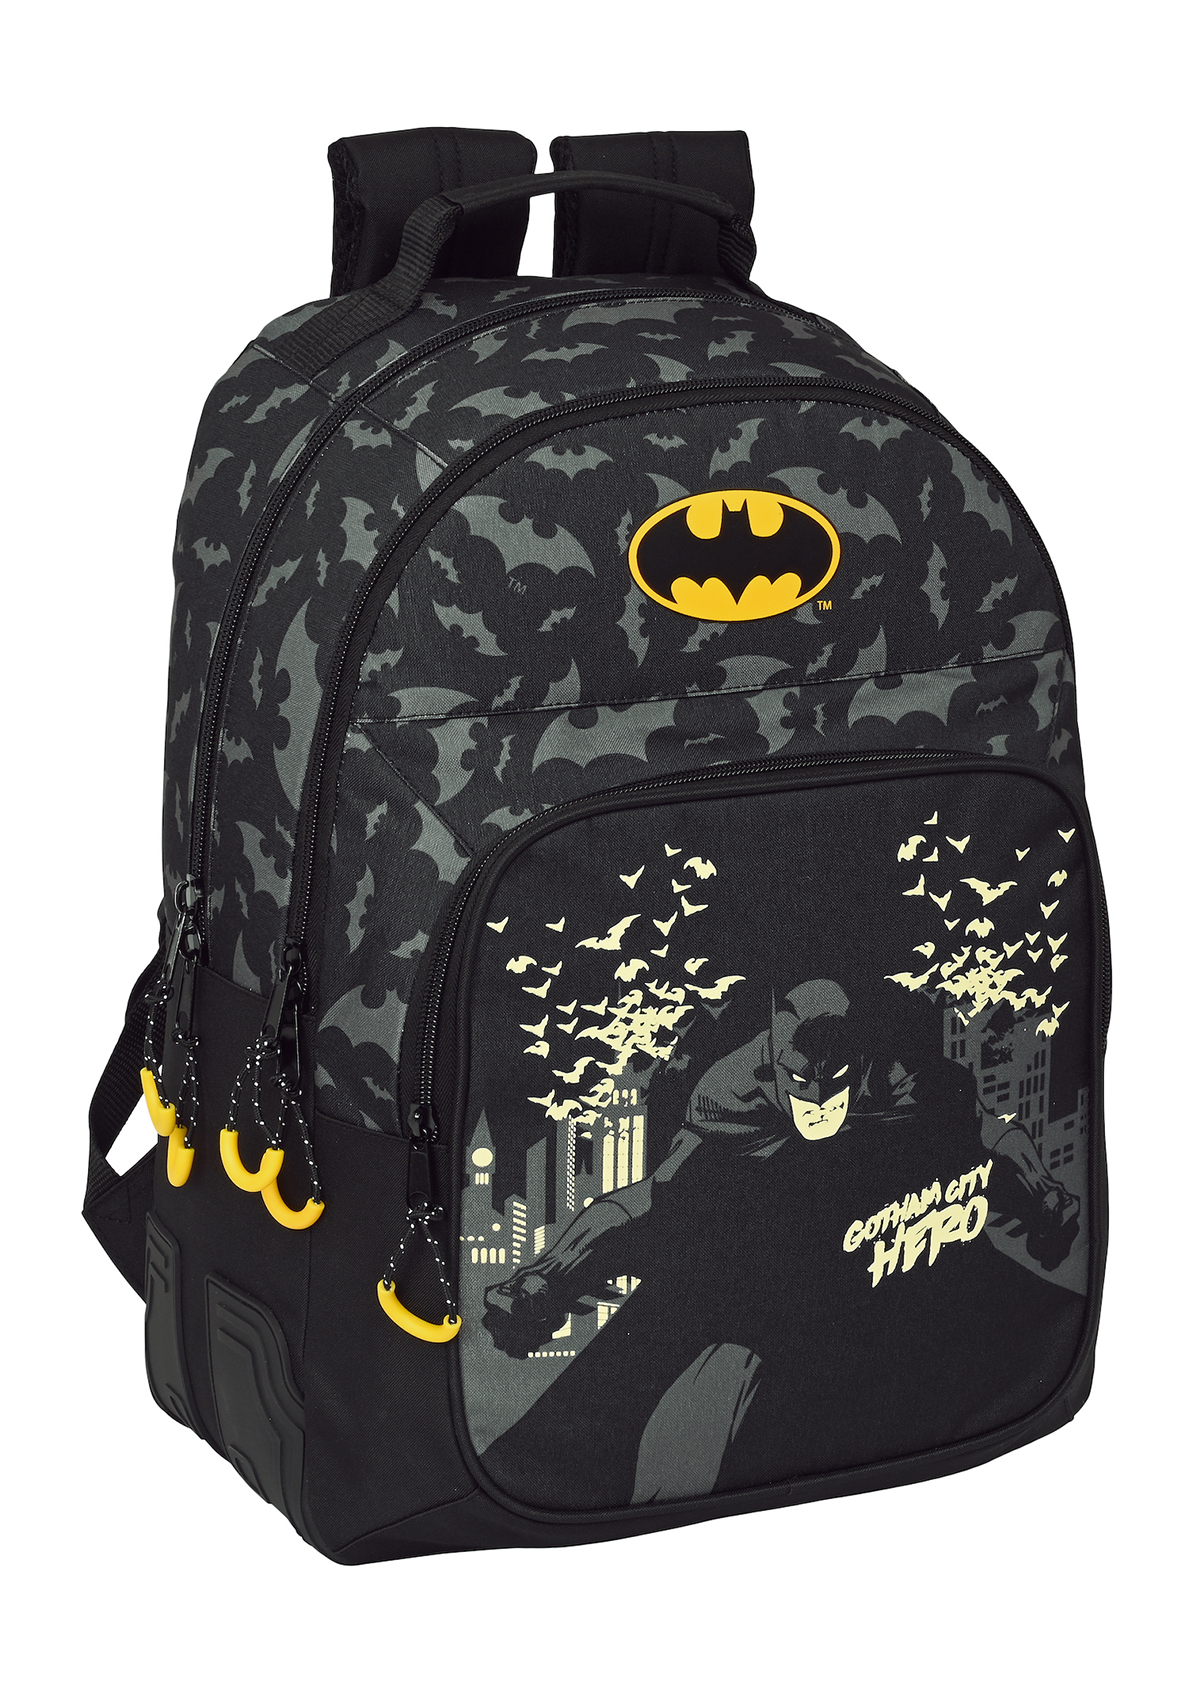 Batman Double Junior Backpack